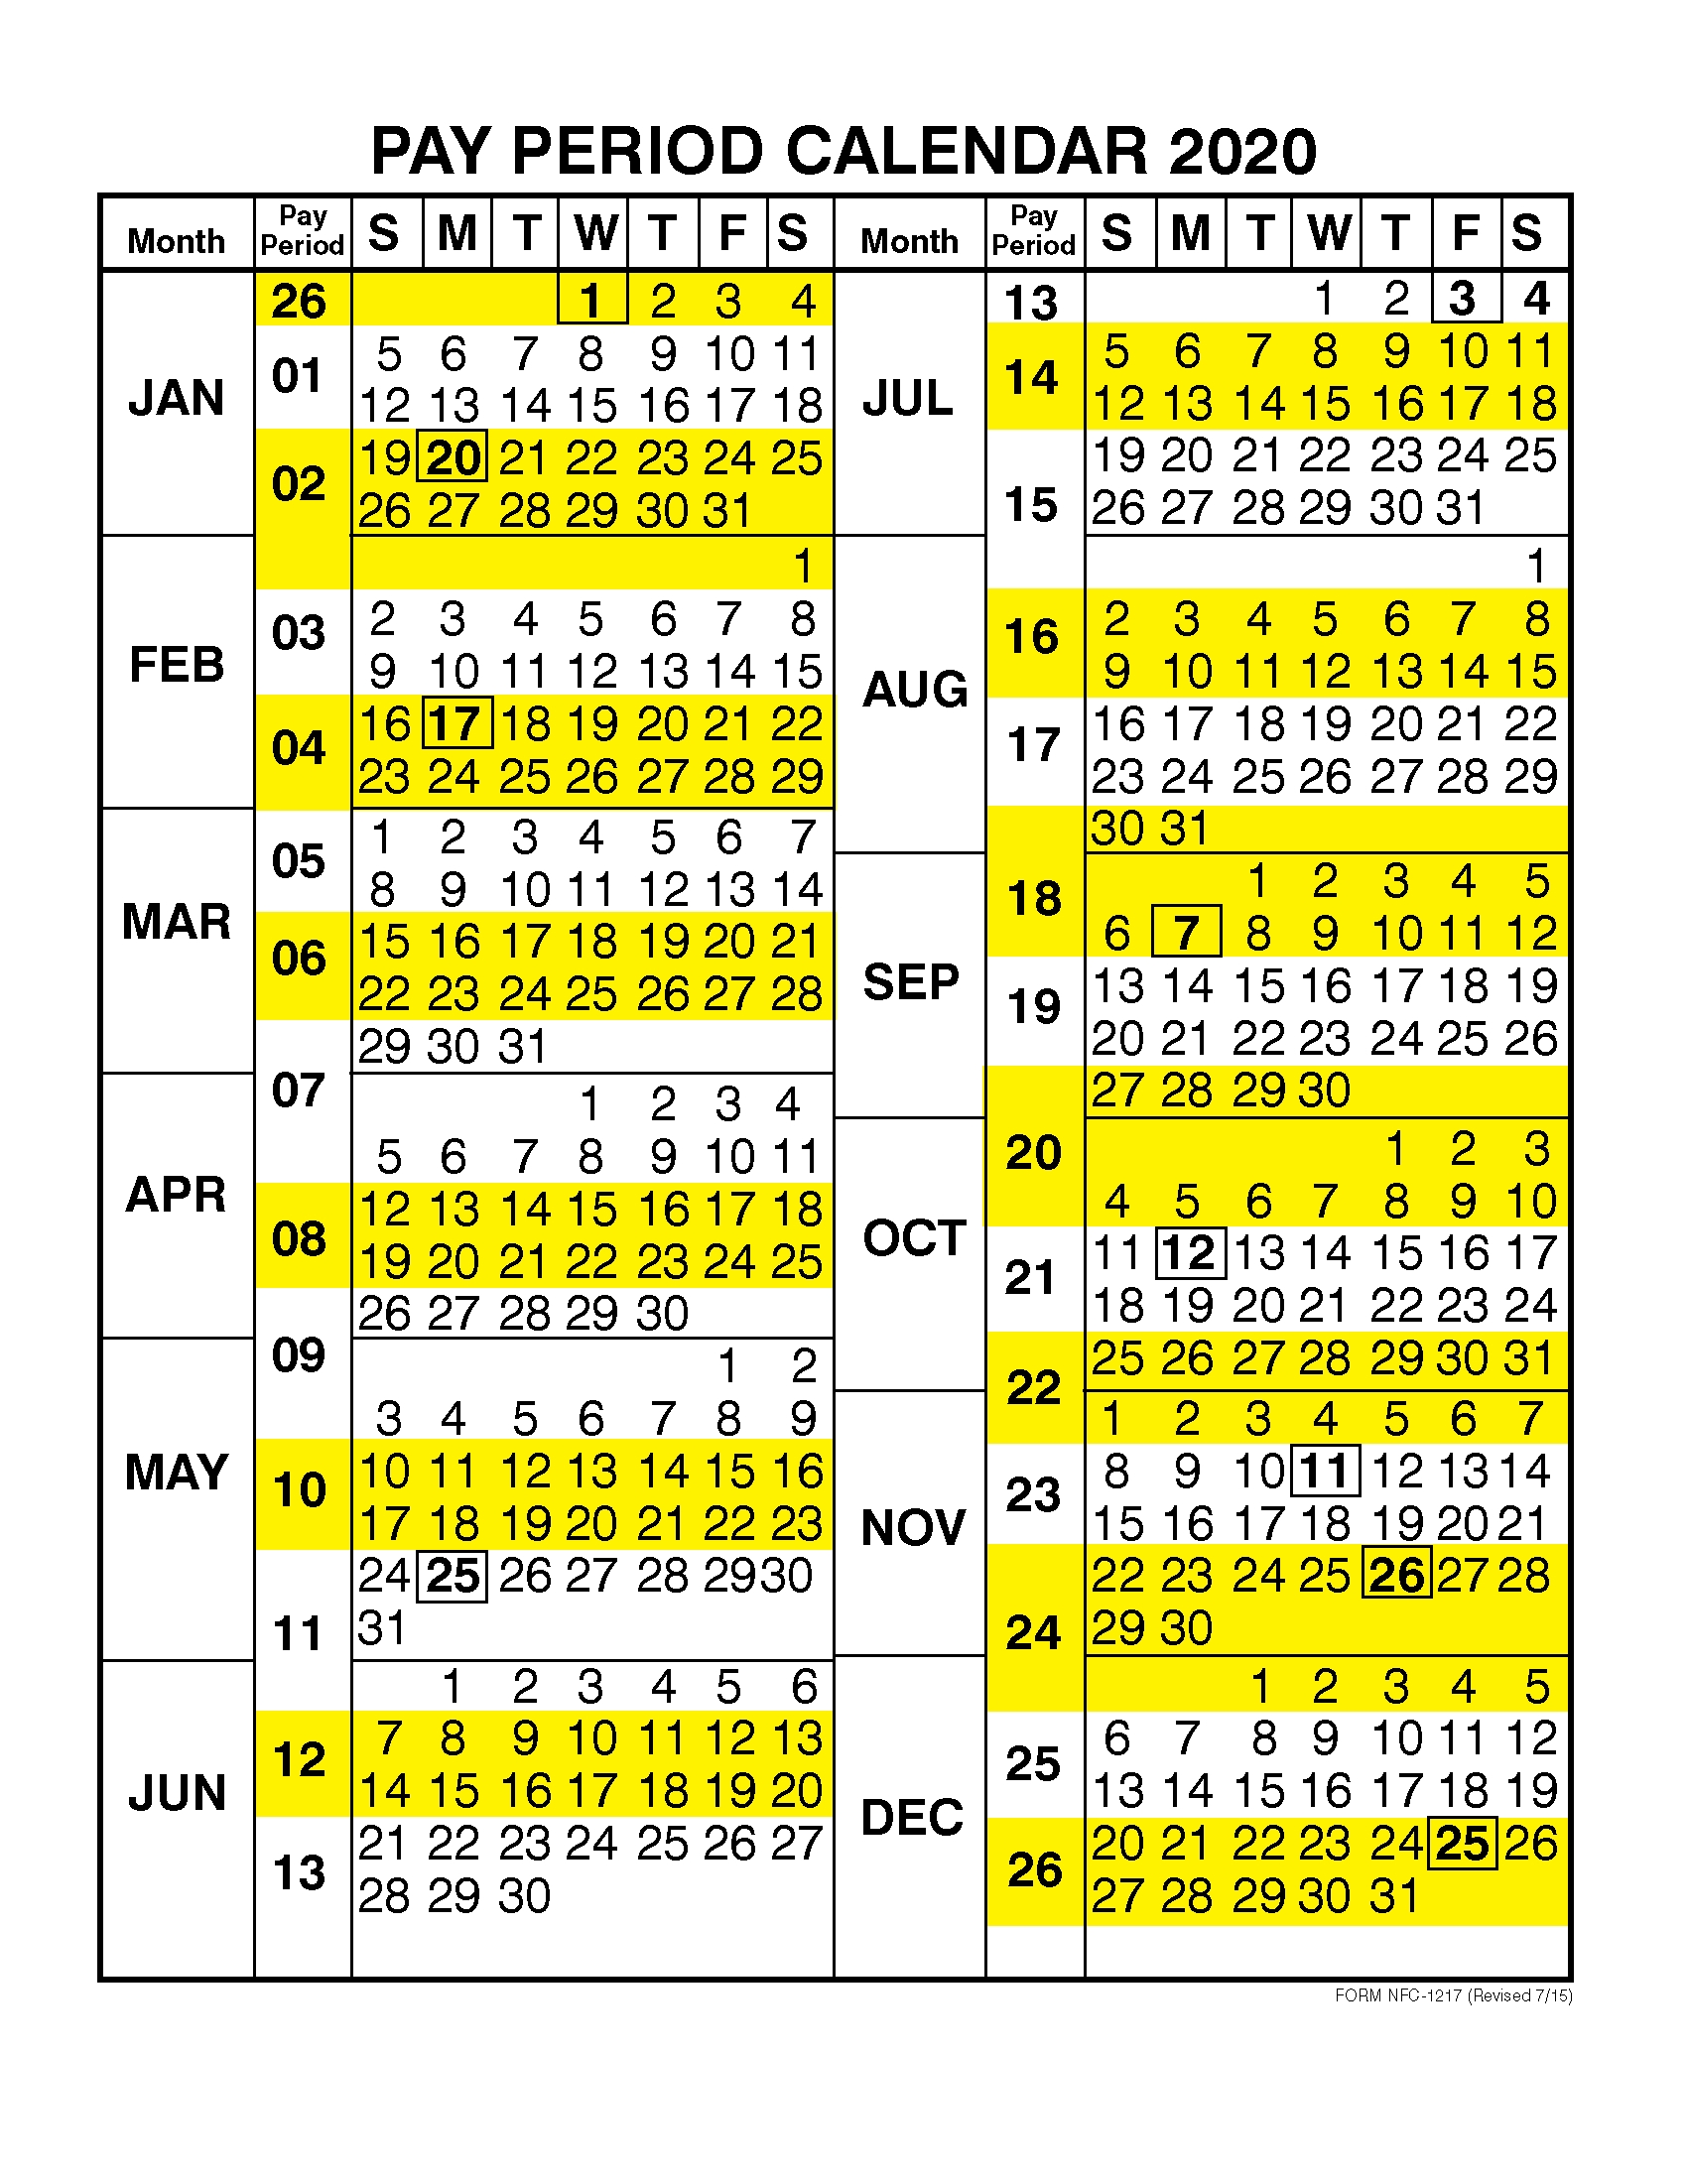 Csun Payroll Calendar 2021 | 2021 Pay Periods Calendar